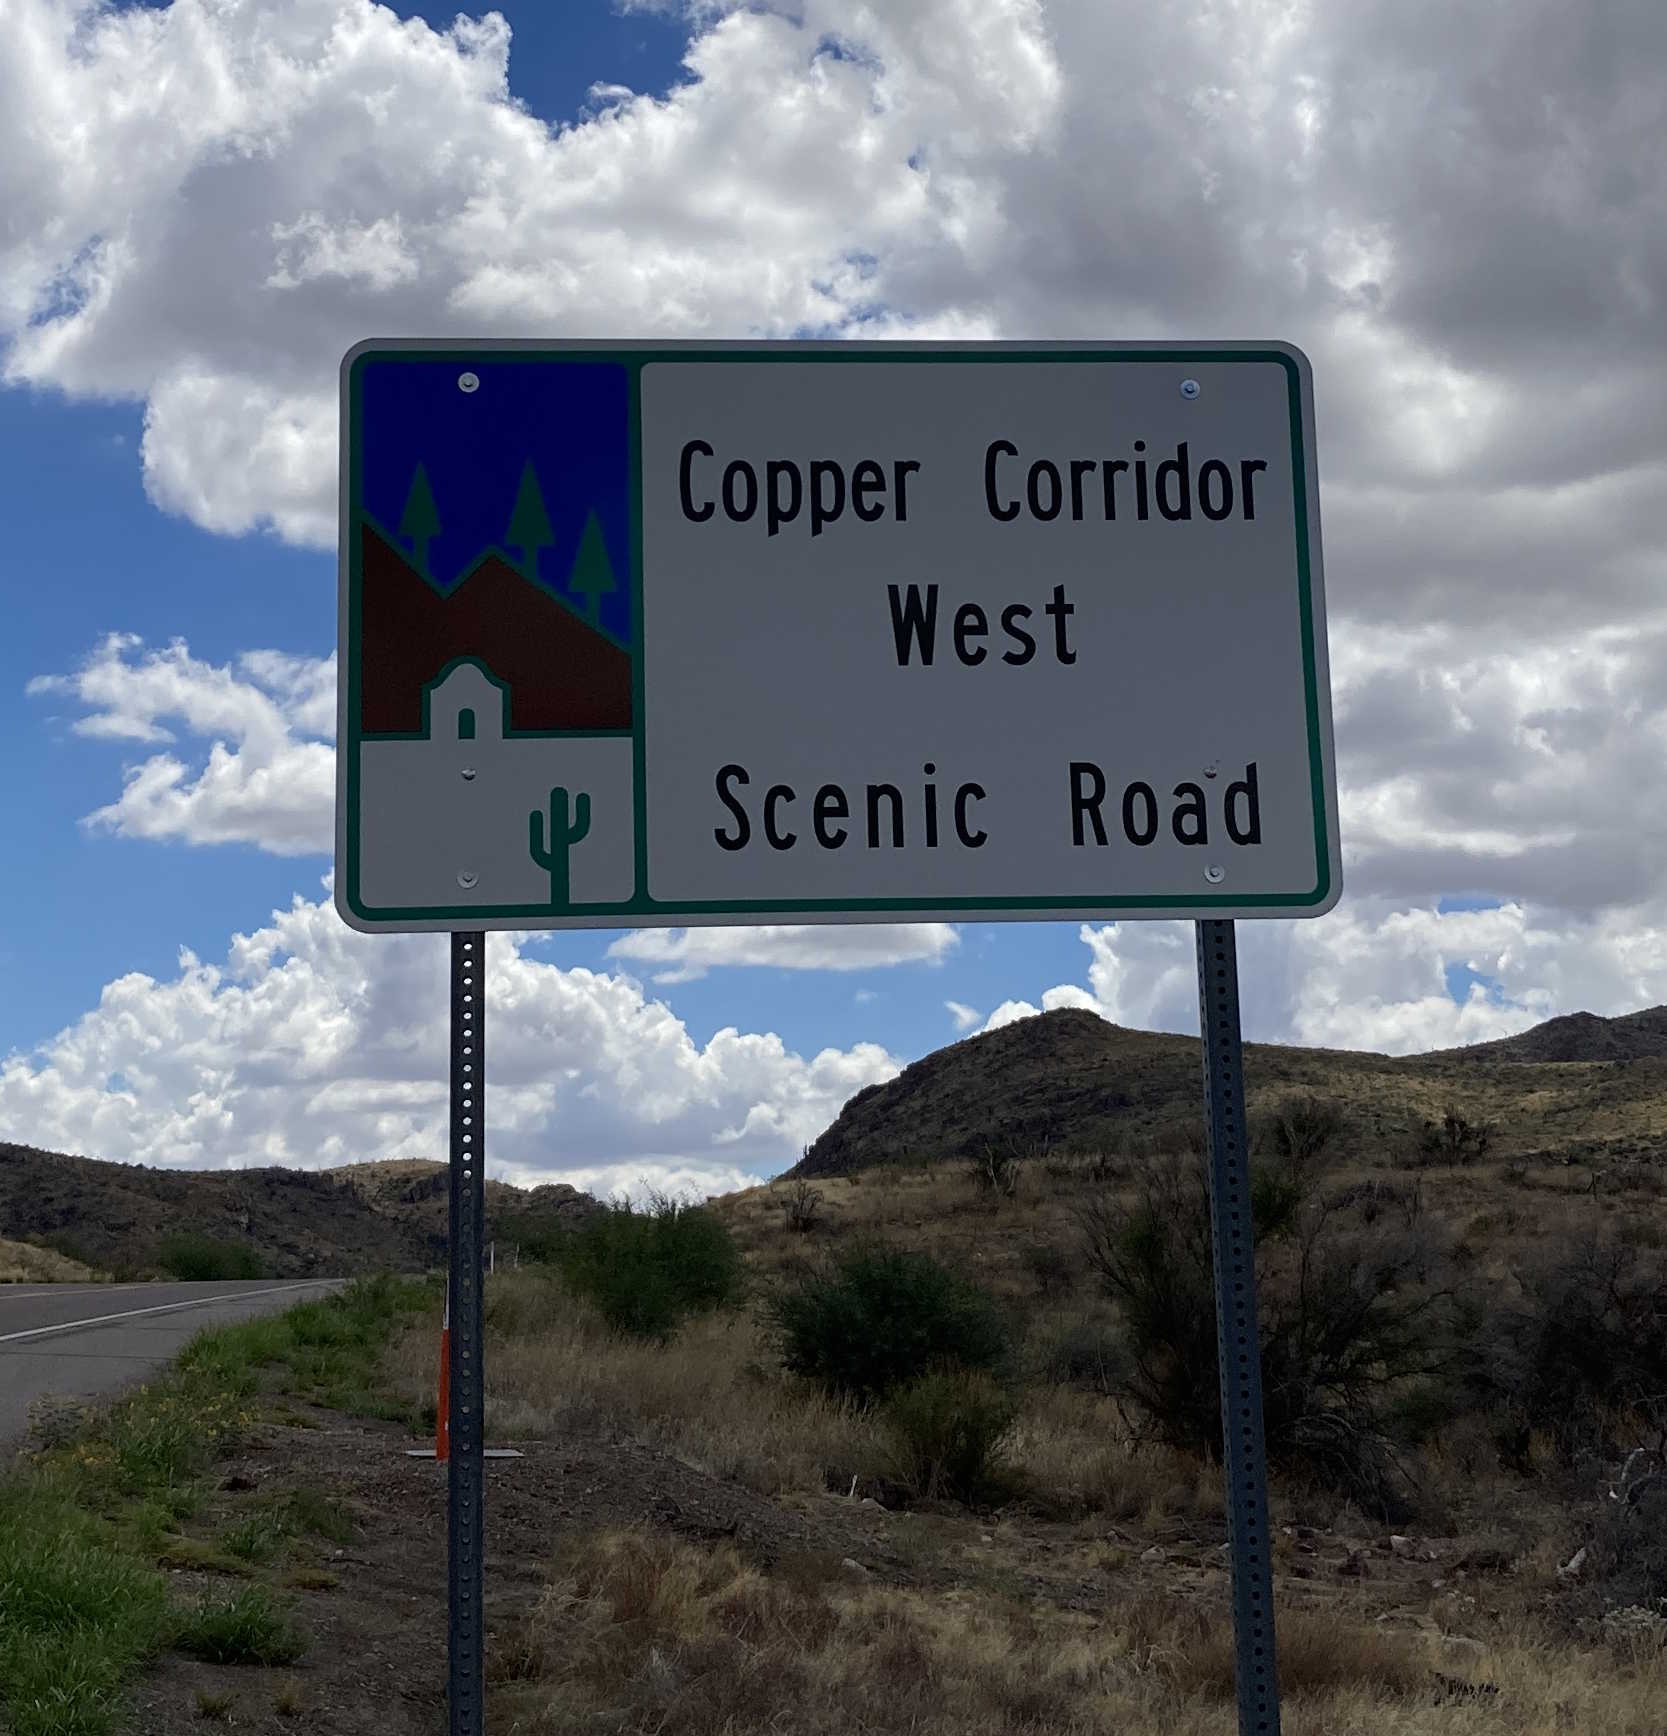 Copper Corridor West Scenic Road sign